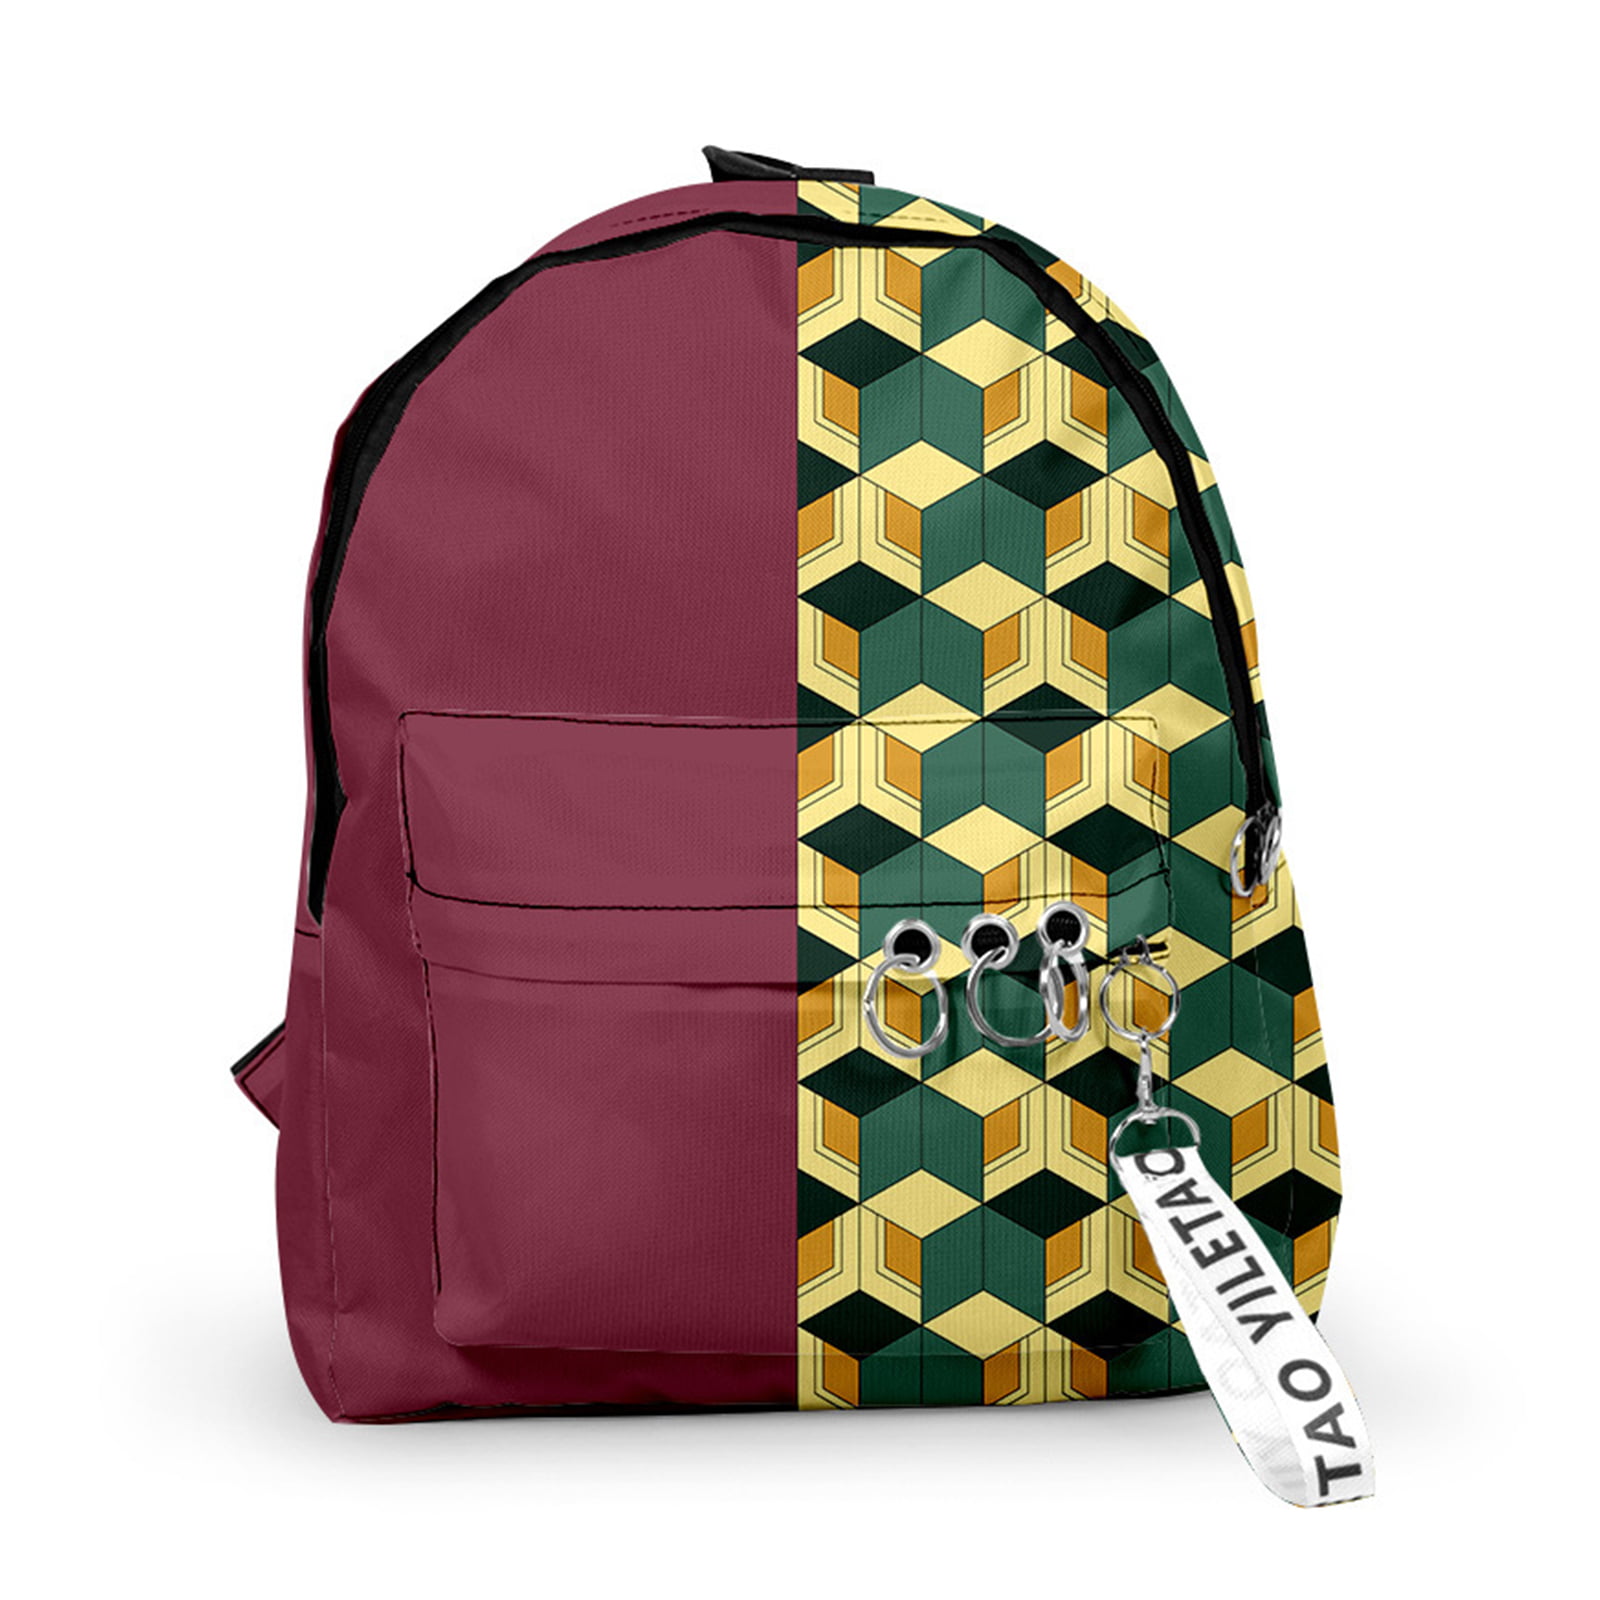 Details about   New Backpack Women Travel Bookbags School Bags Teenage girls Shoulder Laptop